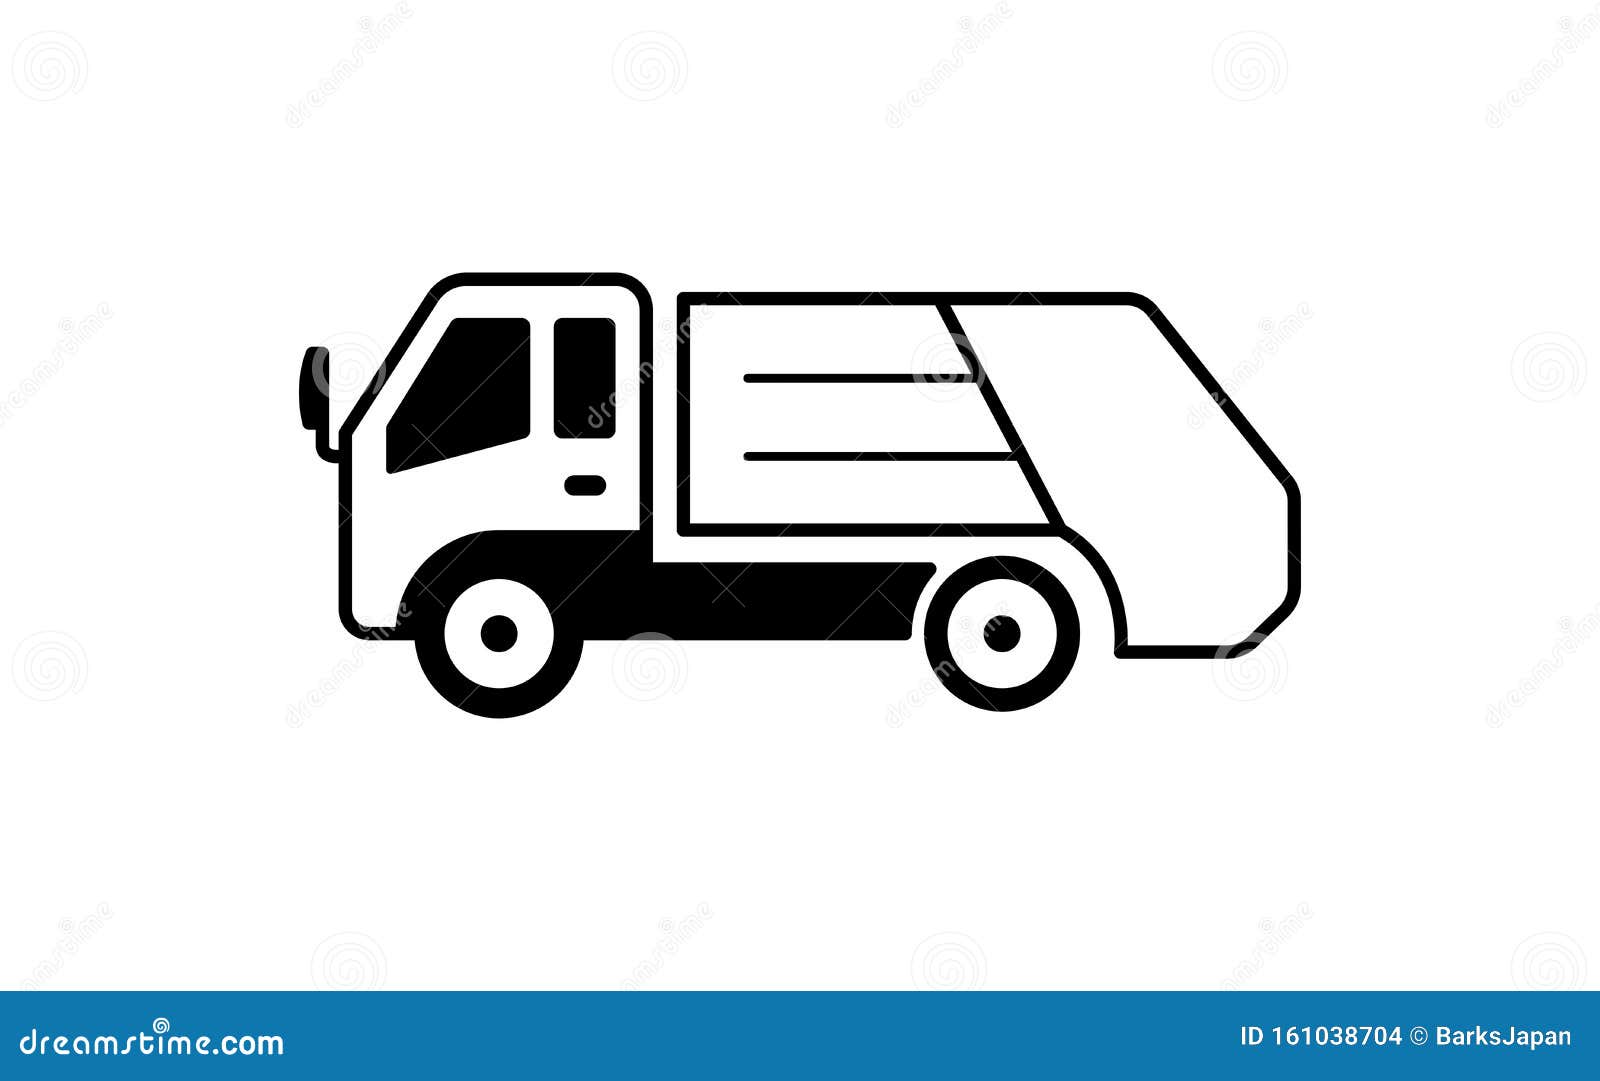 Trucks & Construction Vehicles Illustration / Garbage Truck Stock